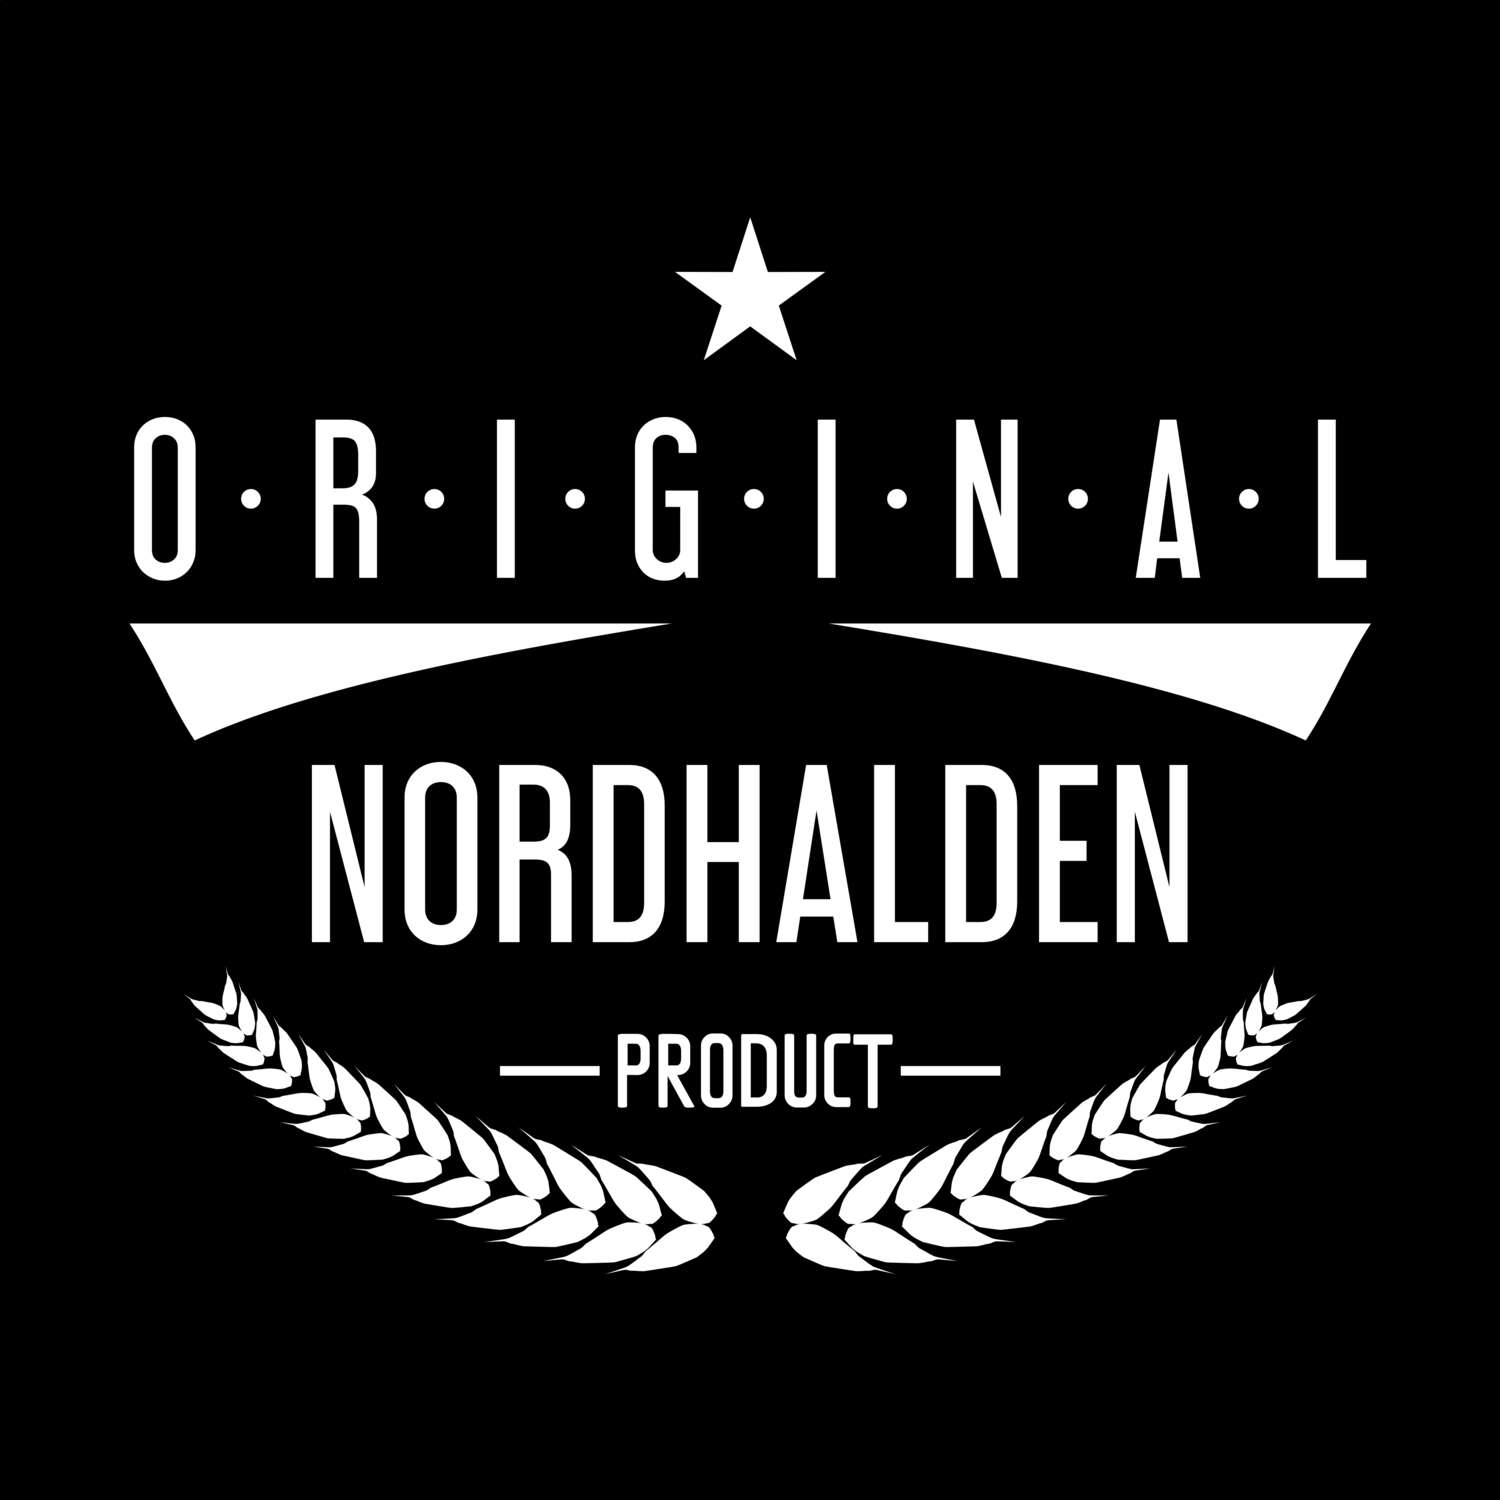 Nordhalden T-Shirt »Original Product«